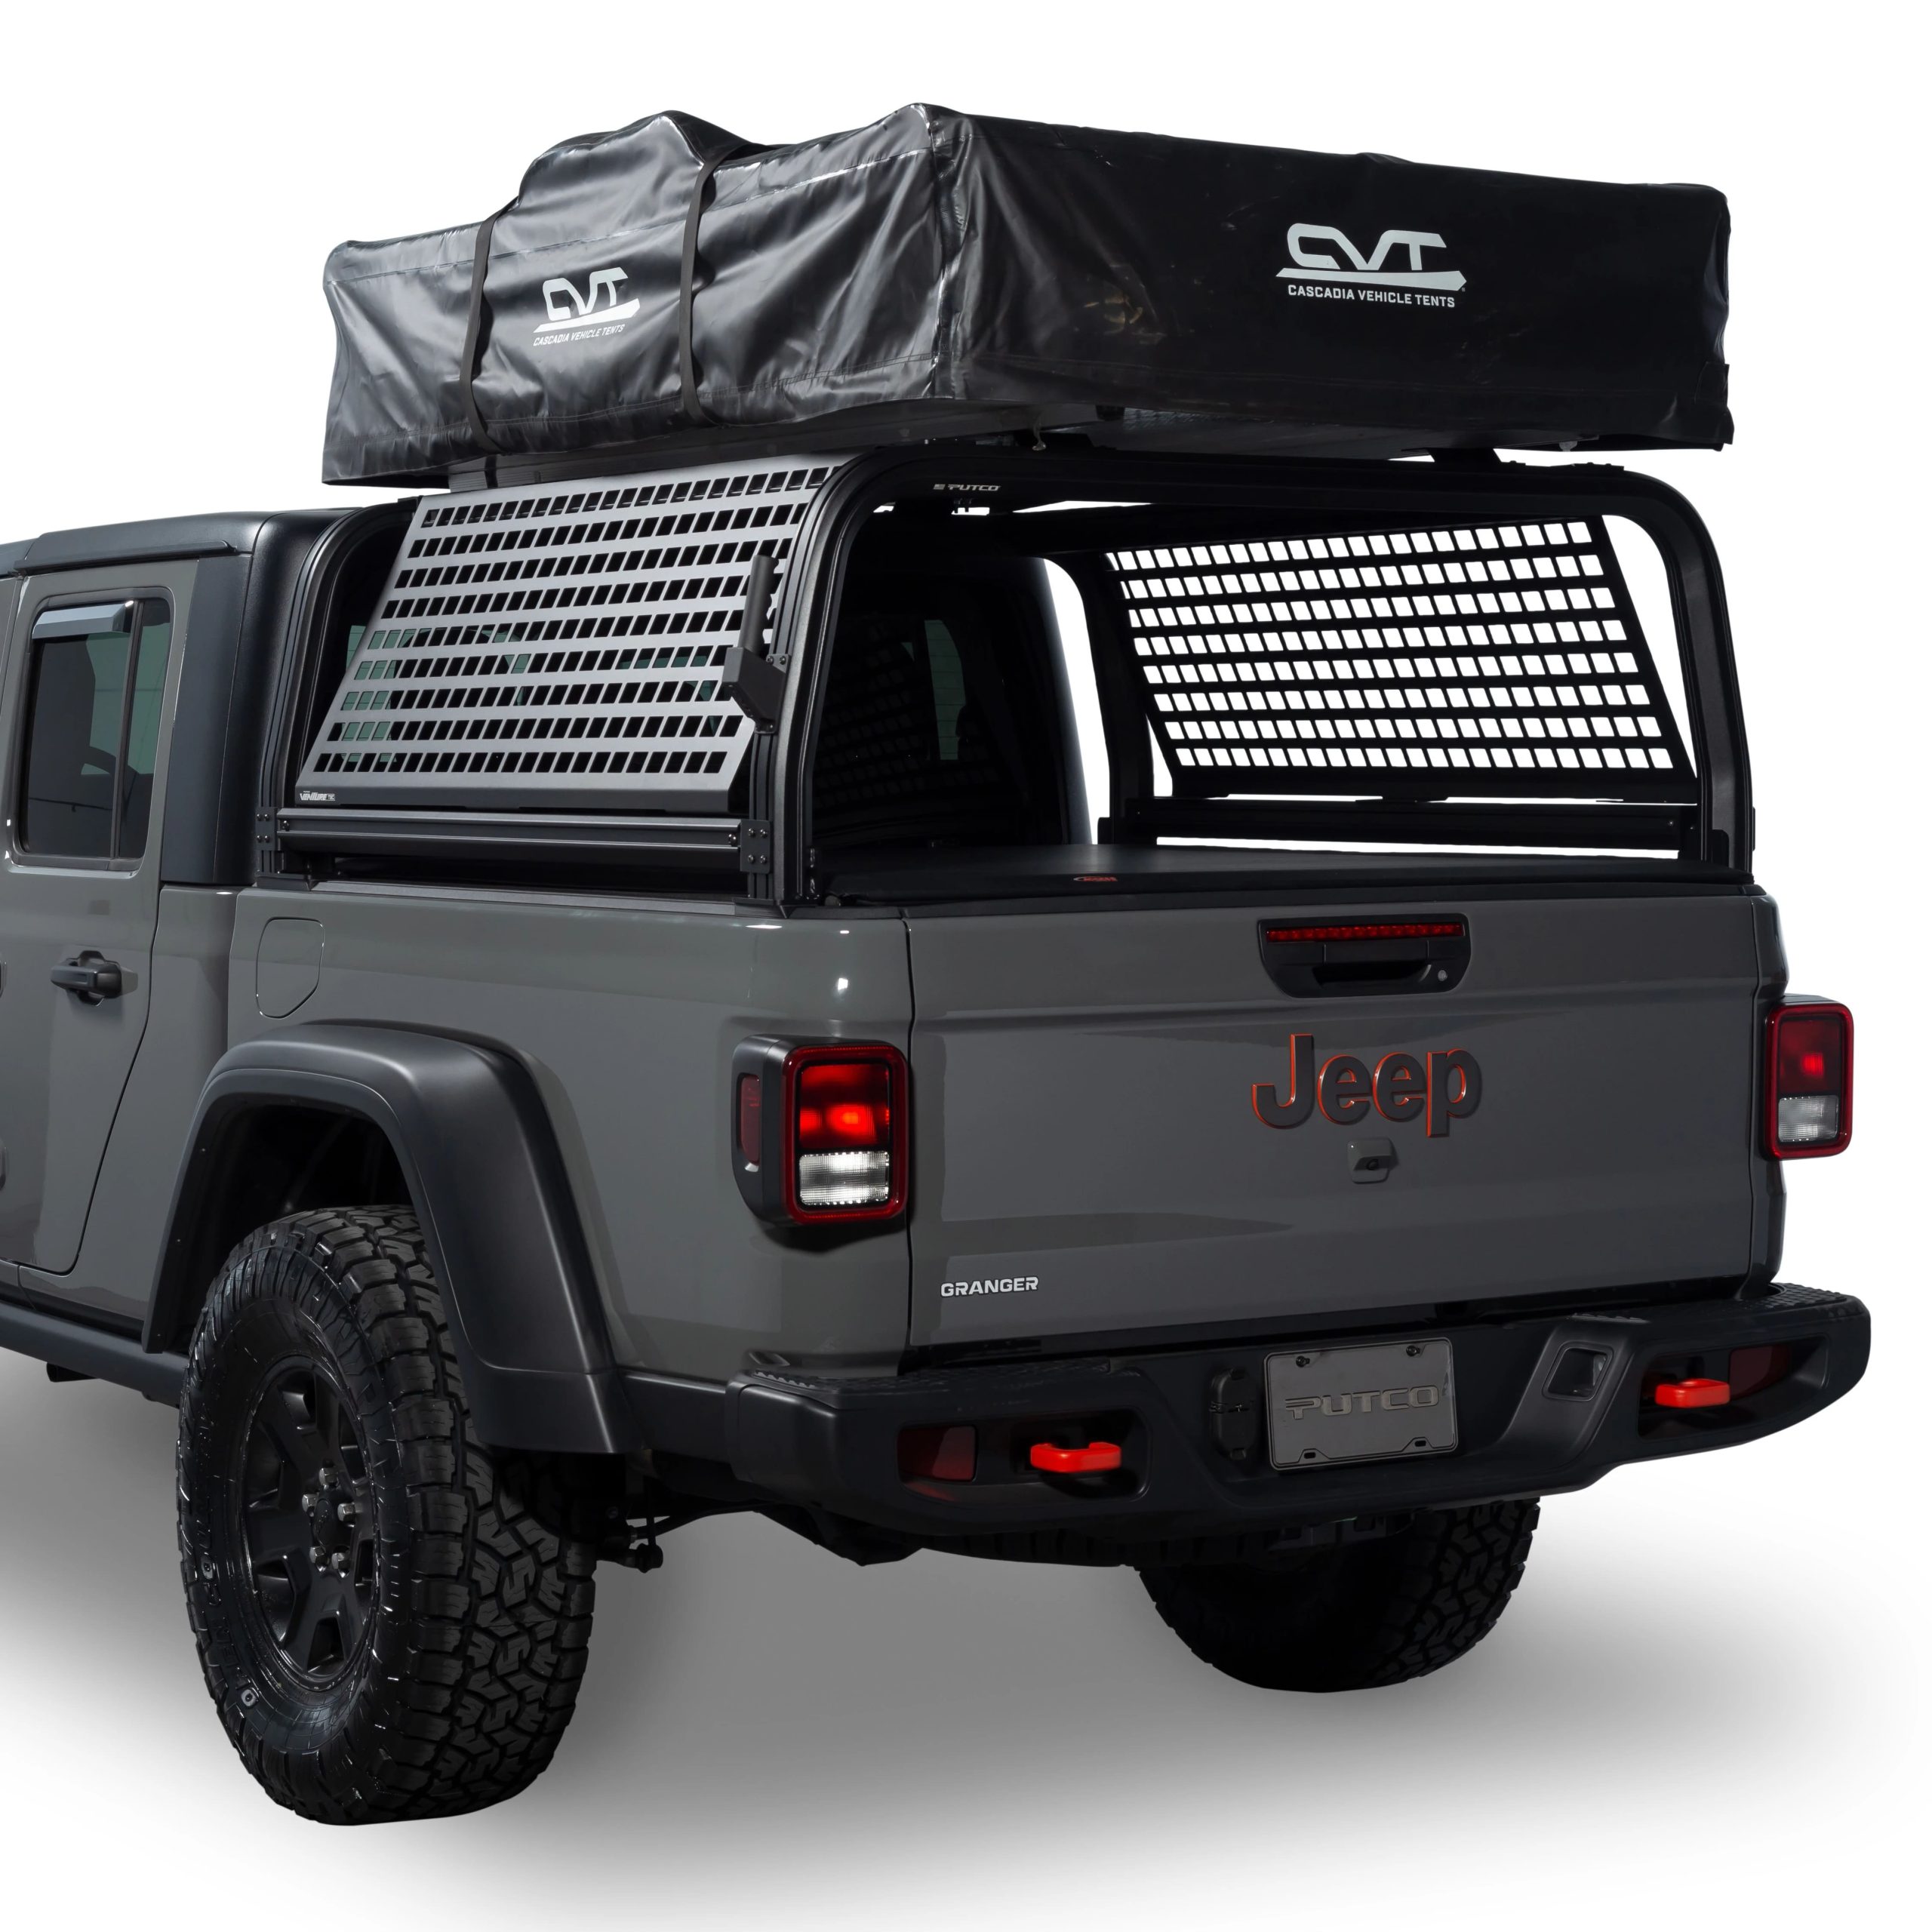 Putco Venture Tec Rack for Jeep Gladiator with Tonneau Cover